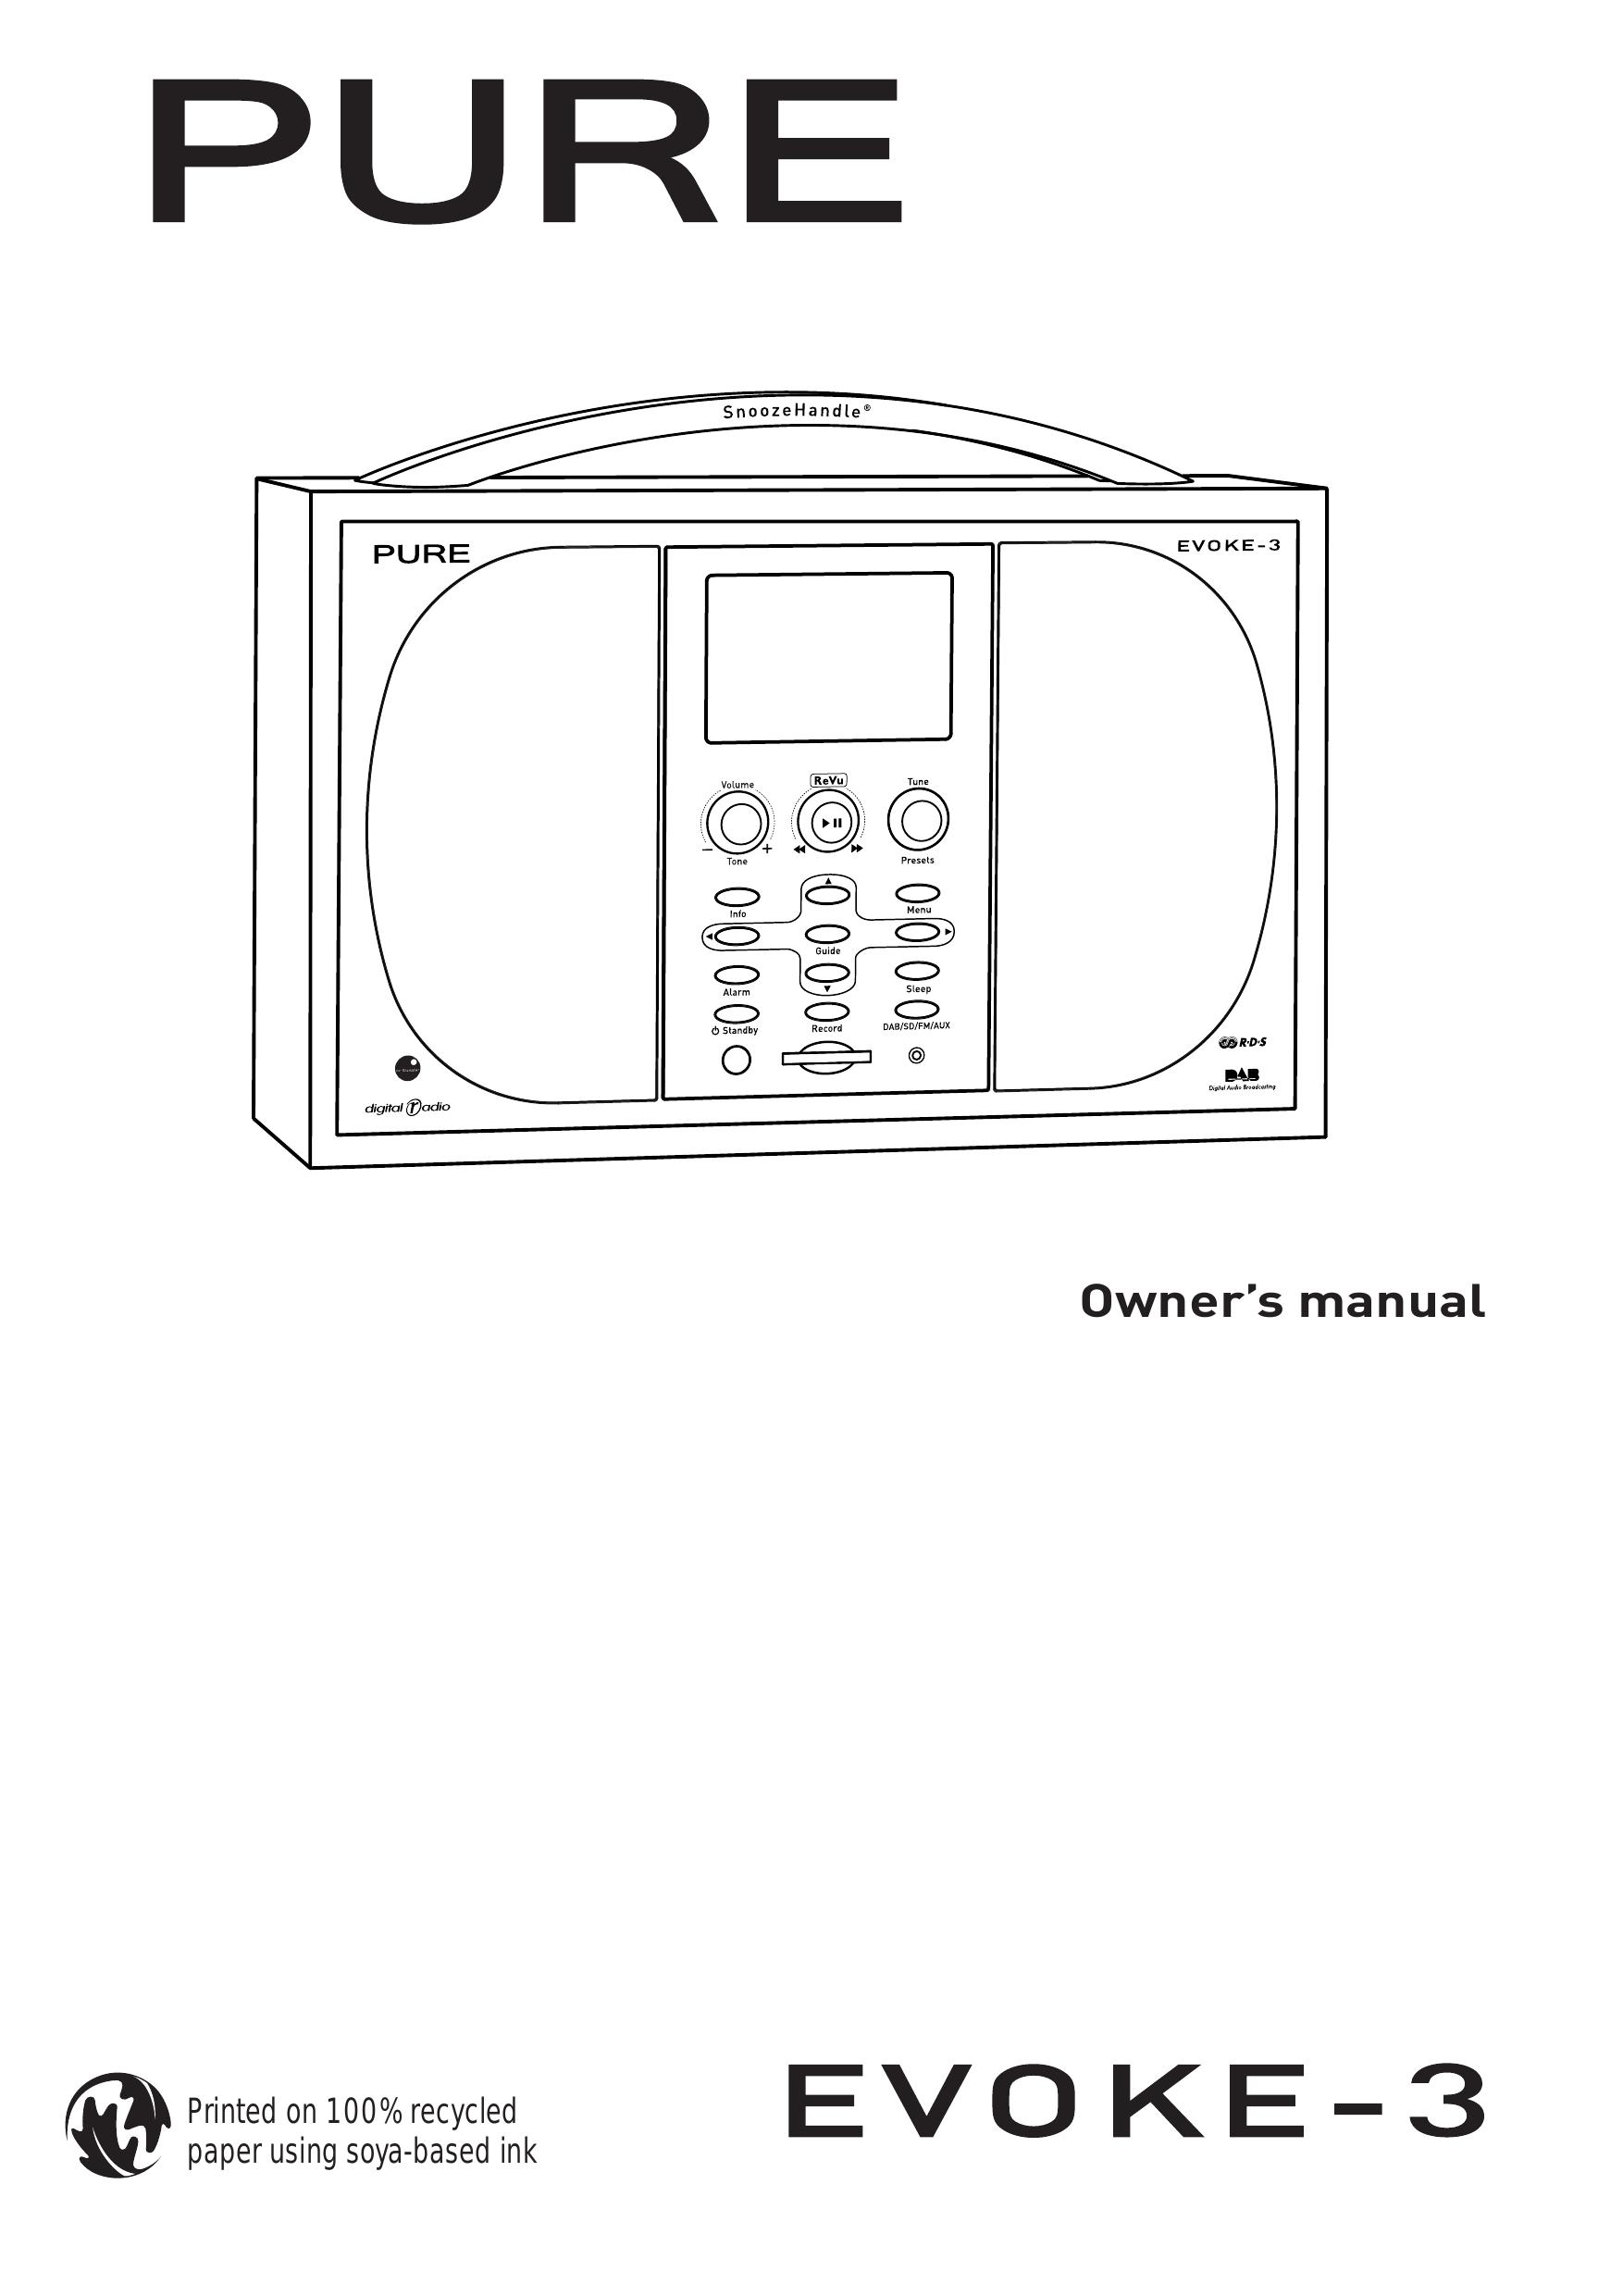 Pure Digital EVOKE-3 Clock Radio User Manual